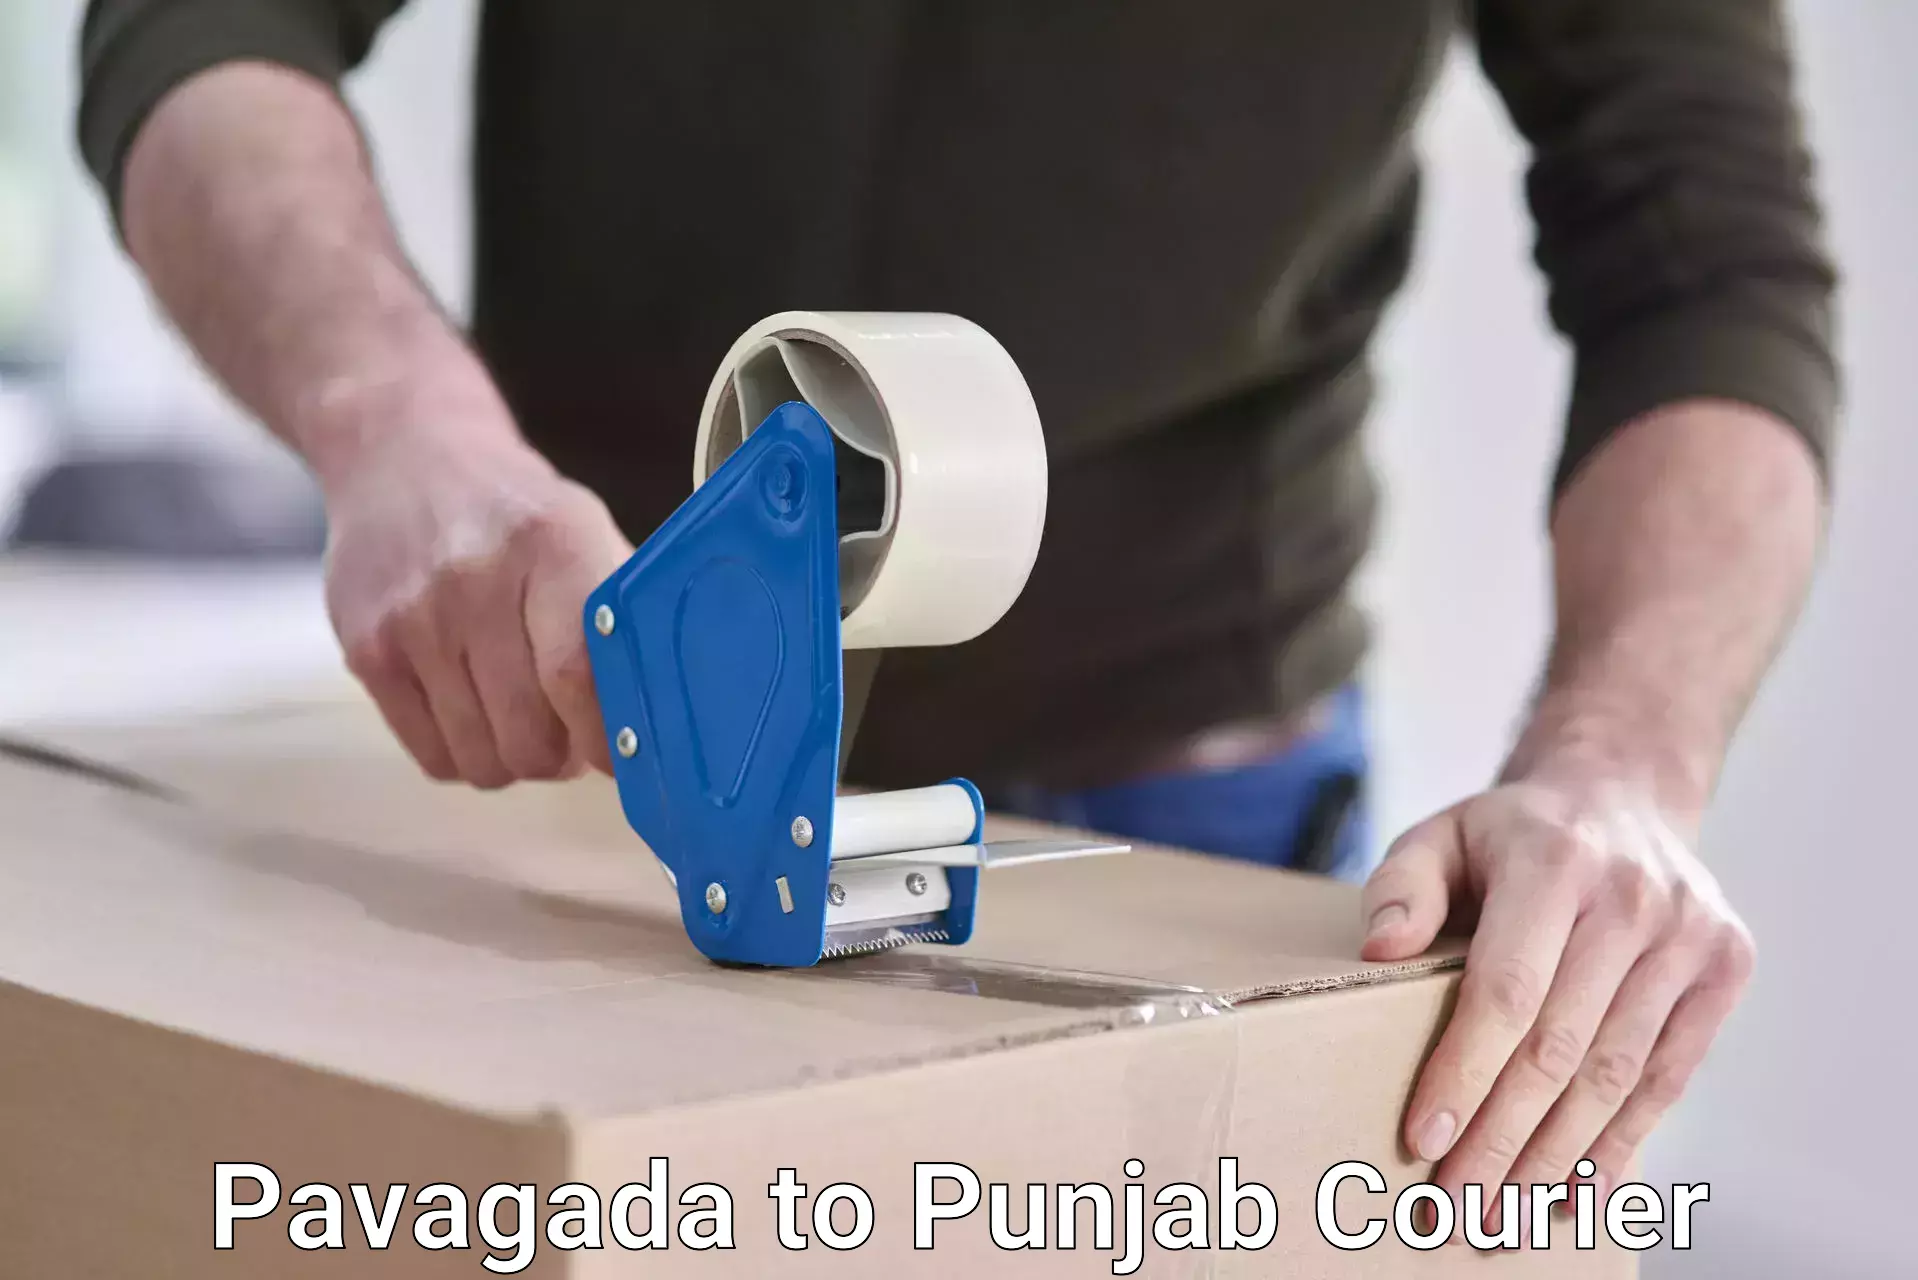 Courier service comparison Pavagada to Machhiwara